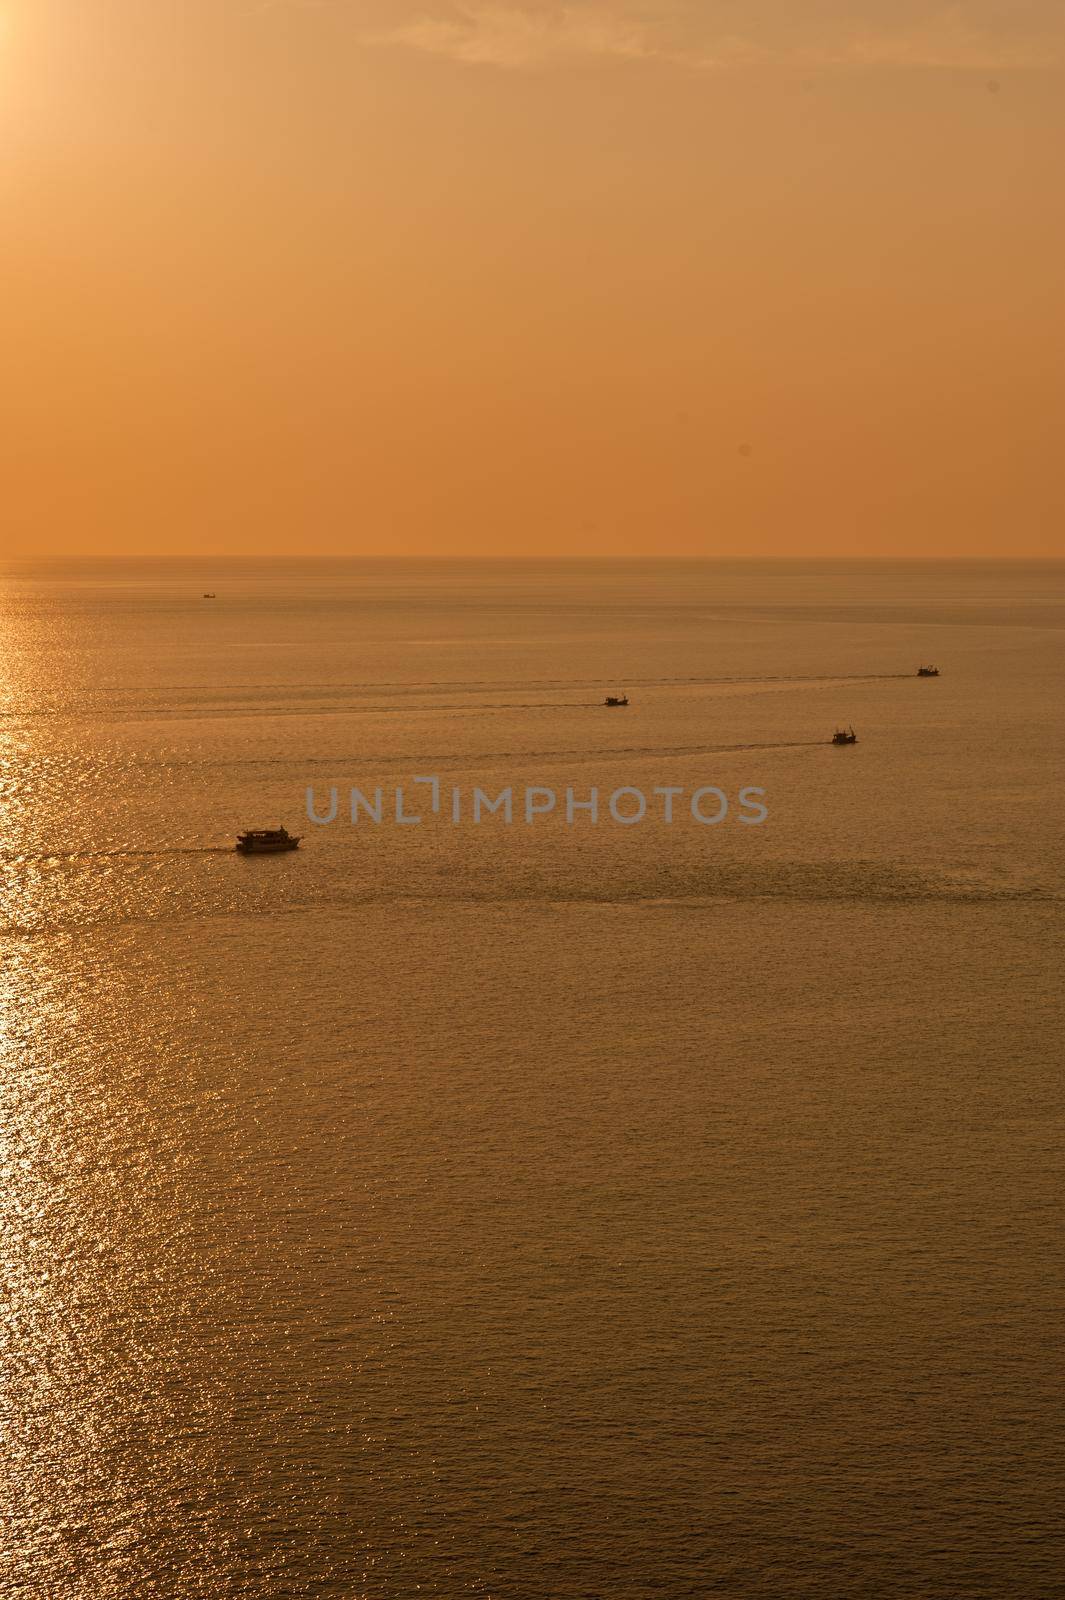 Beauty landscape with golden sunset above the sea background, PHUKET THAILAND